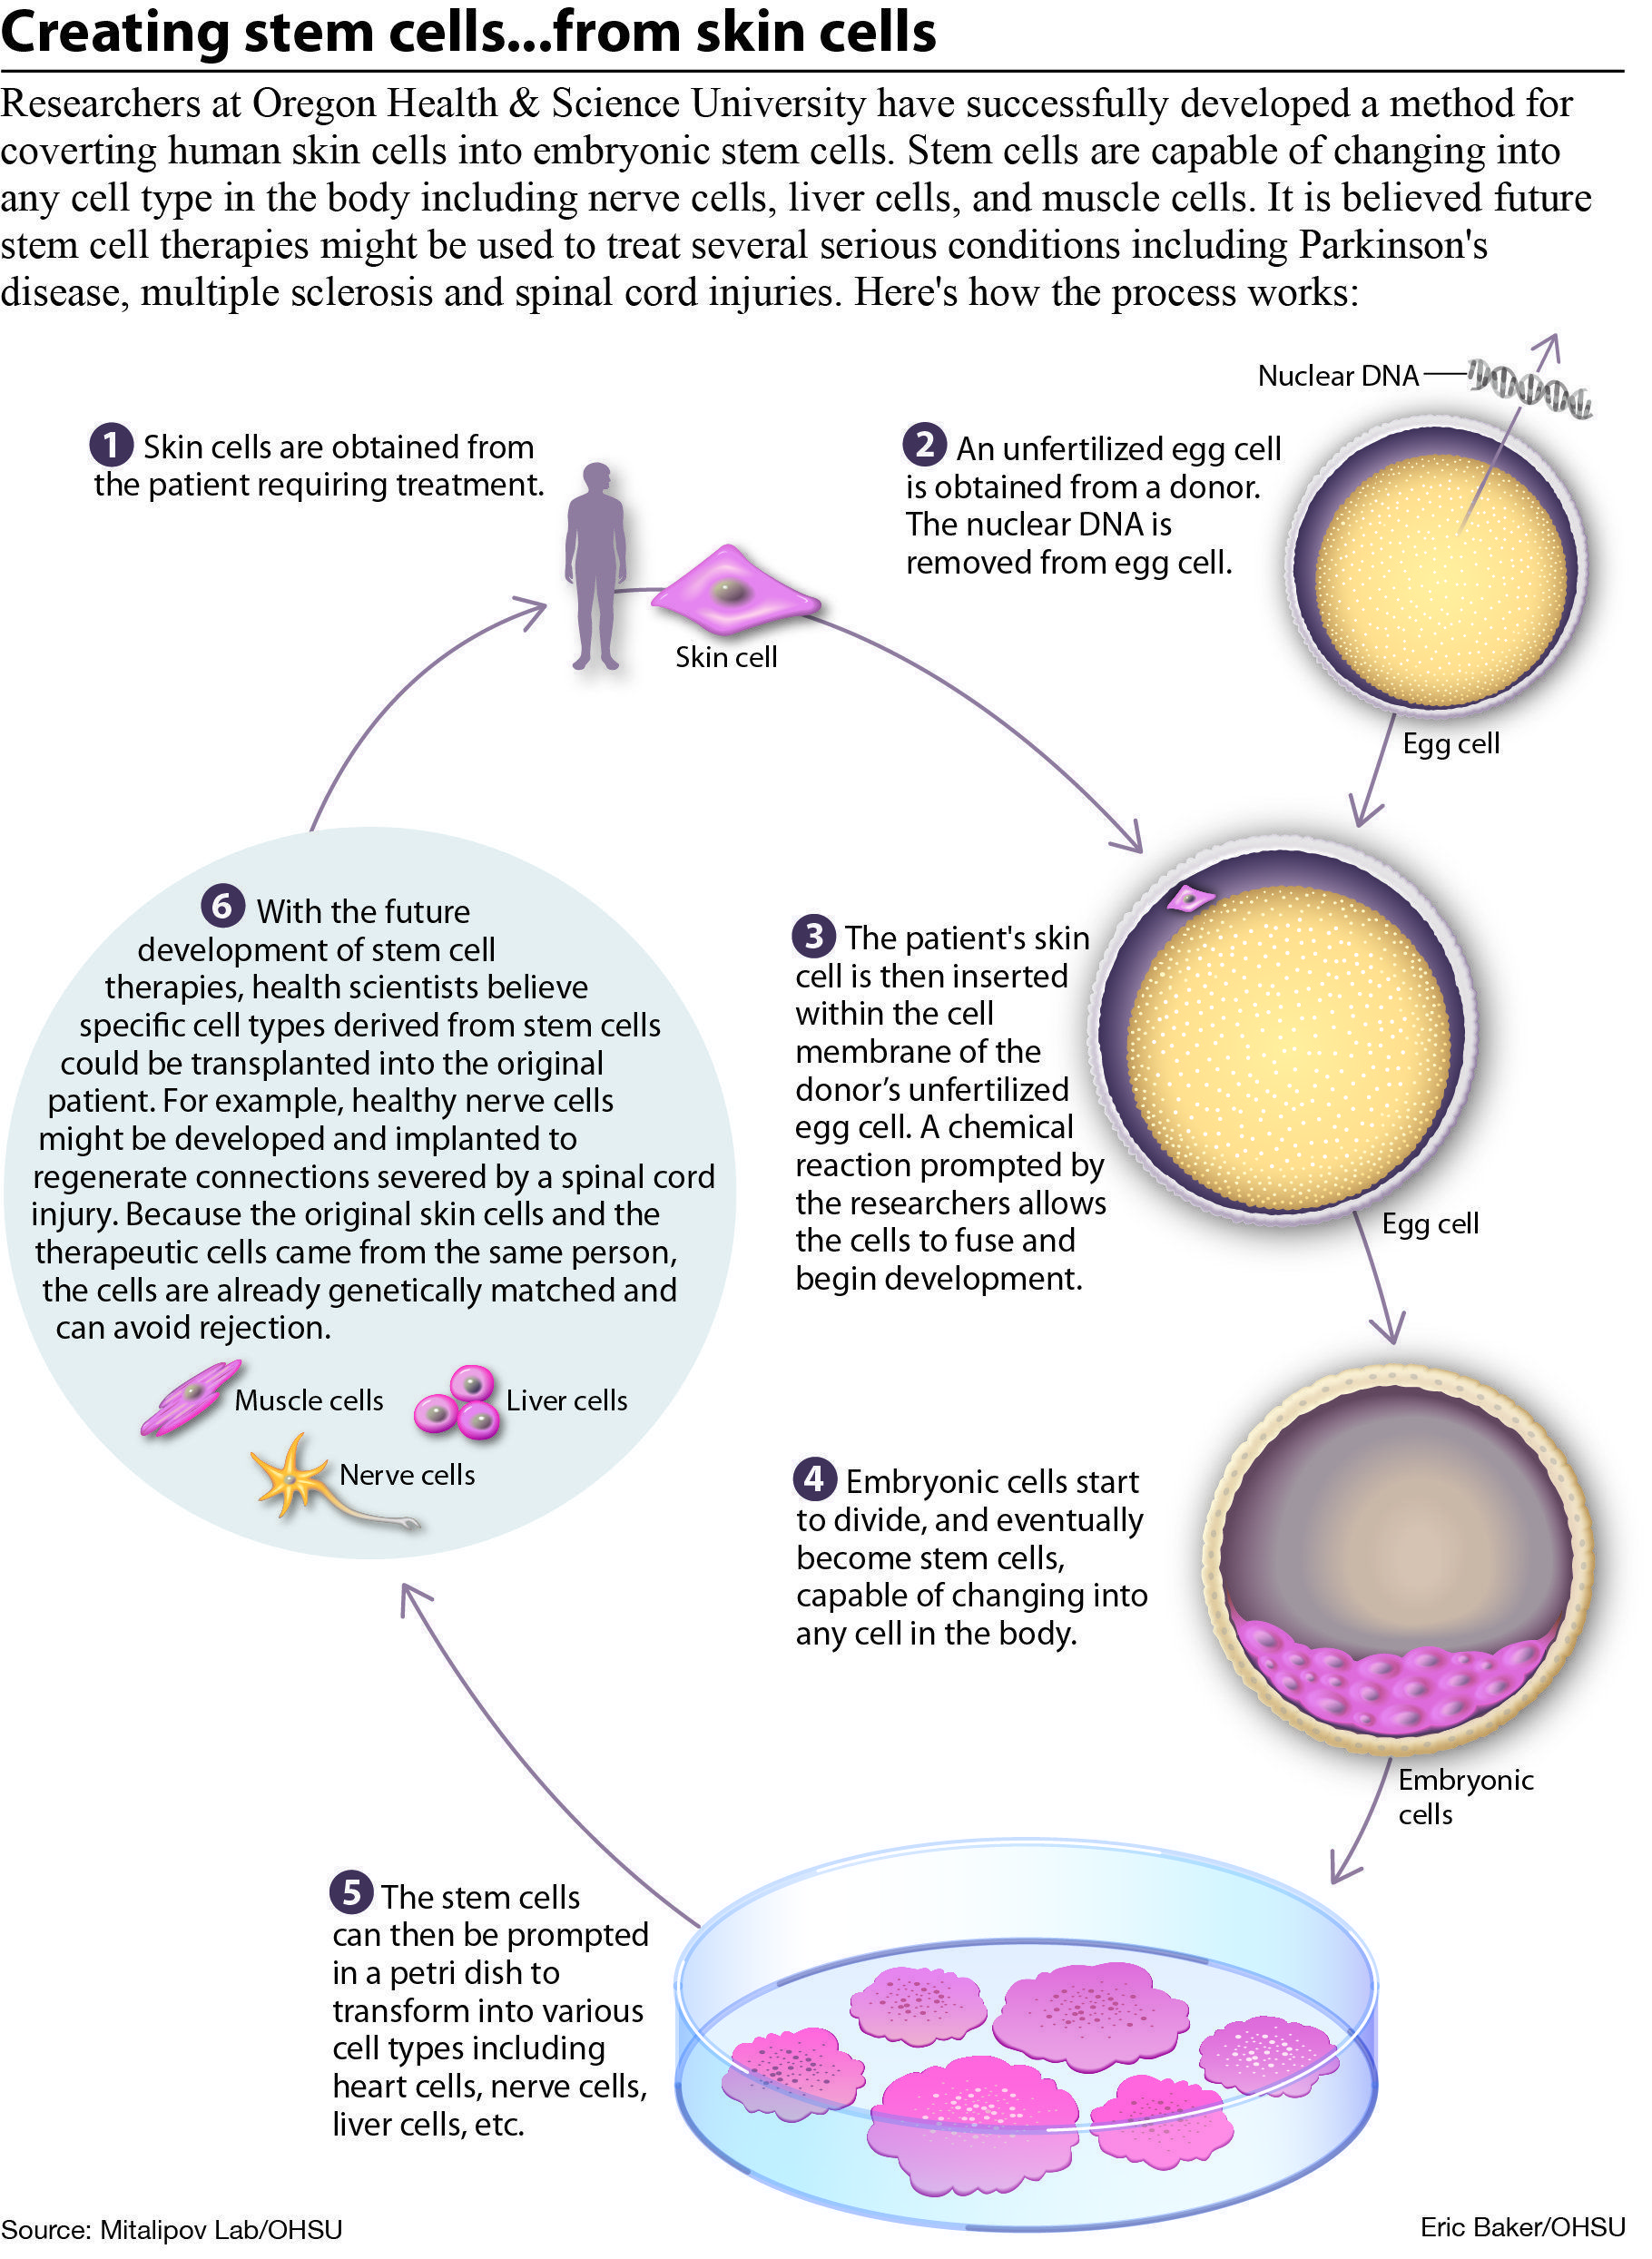 Making sperm from stem cells